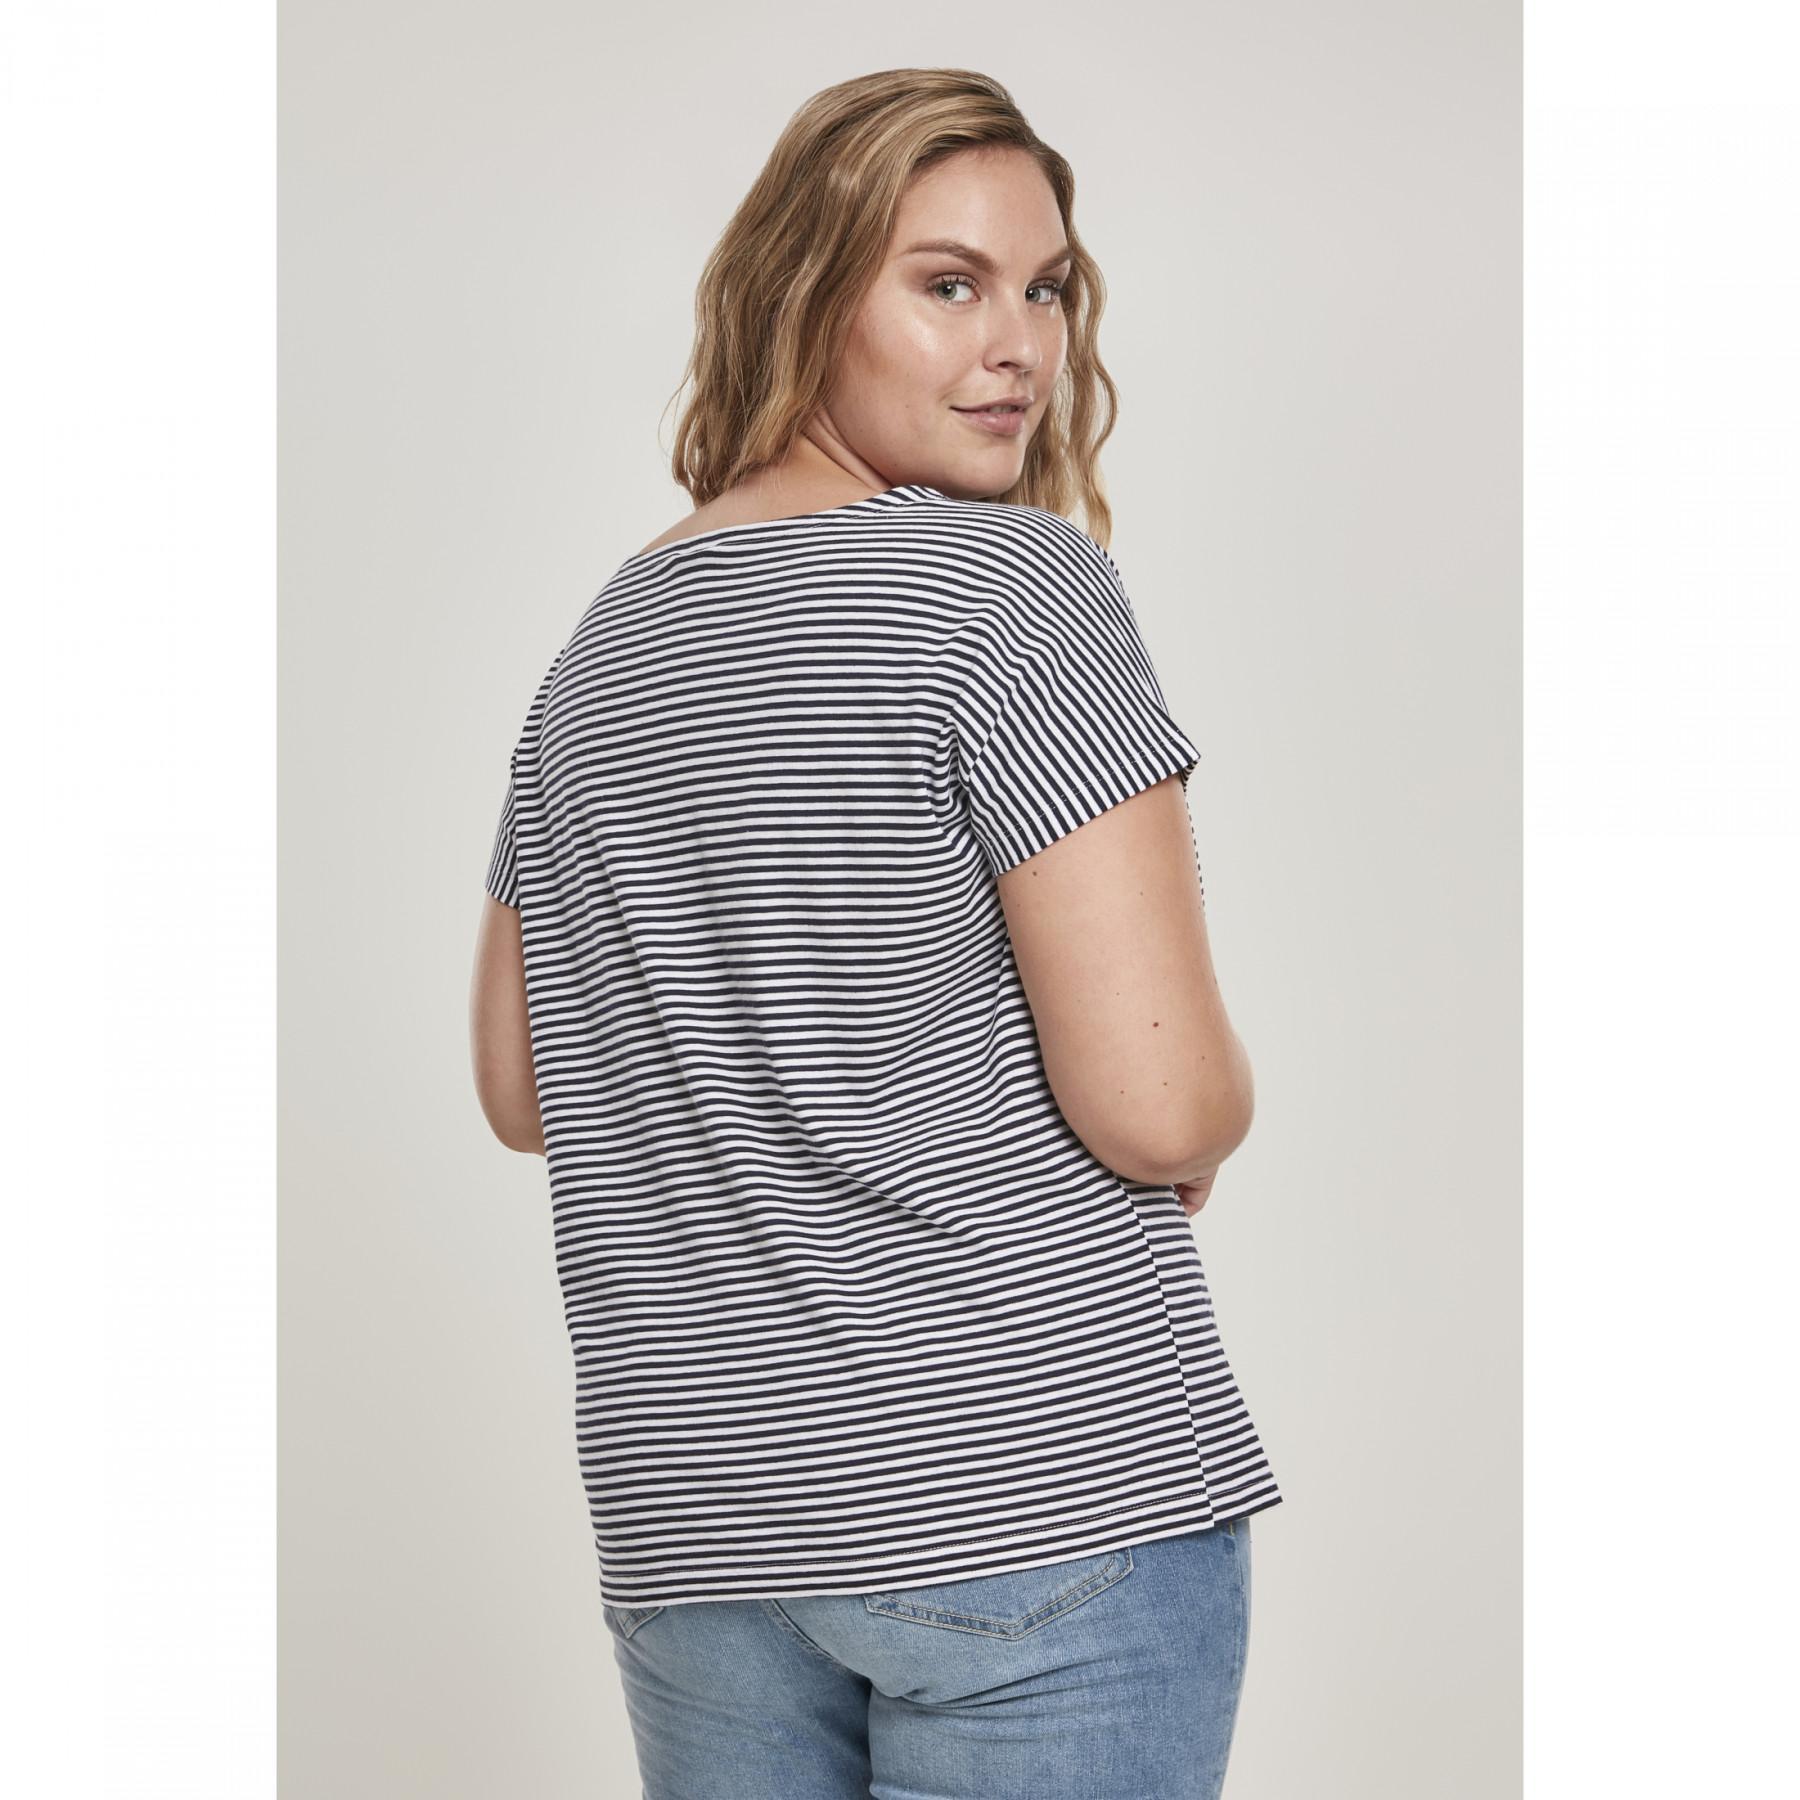 Camiseta mujer tamaños grandes Urban Classic yarn baby Stripe